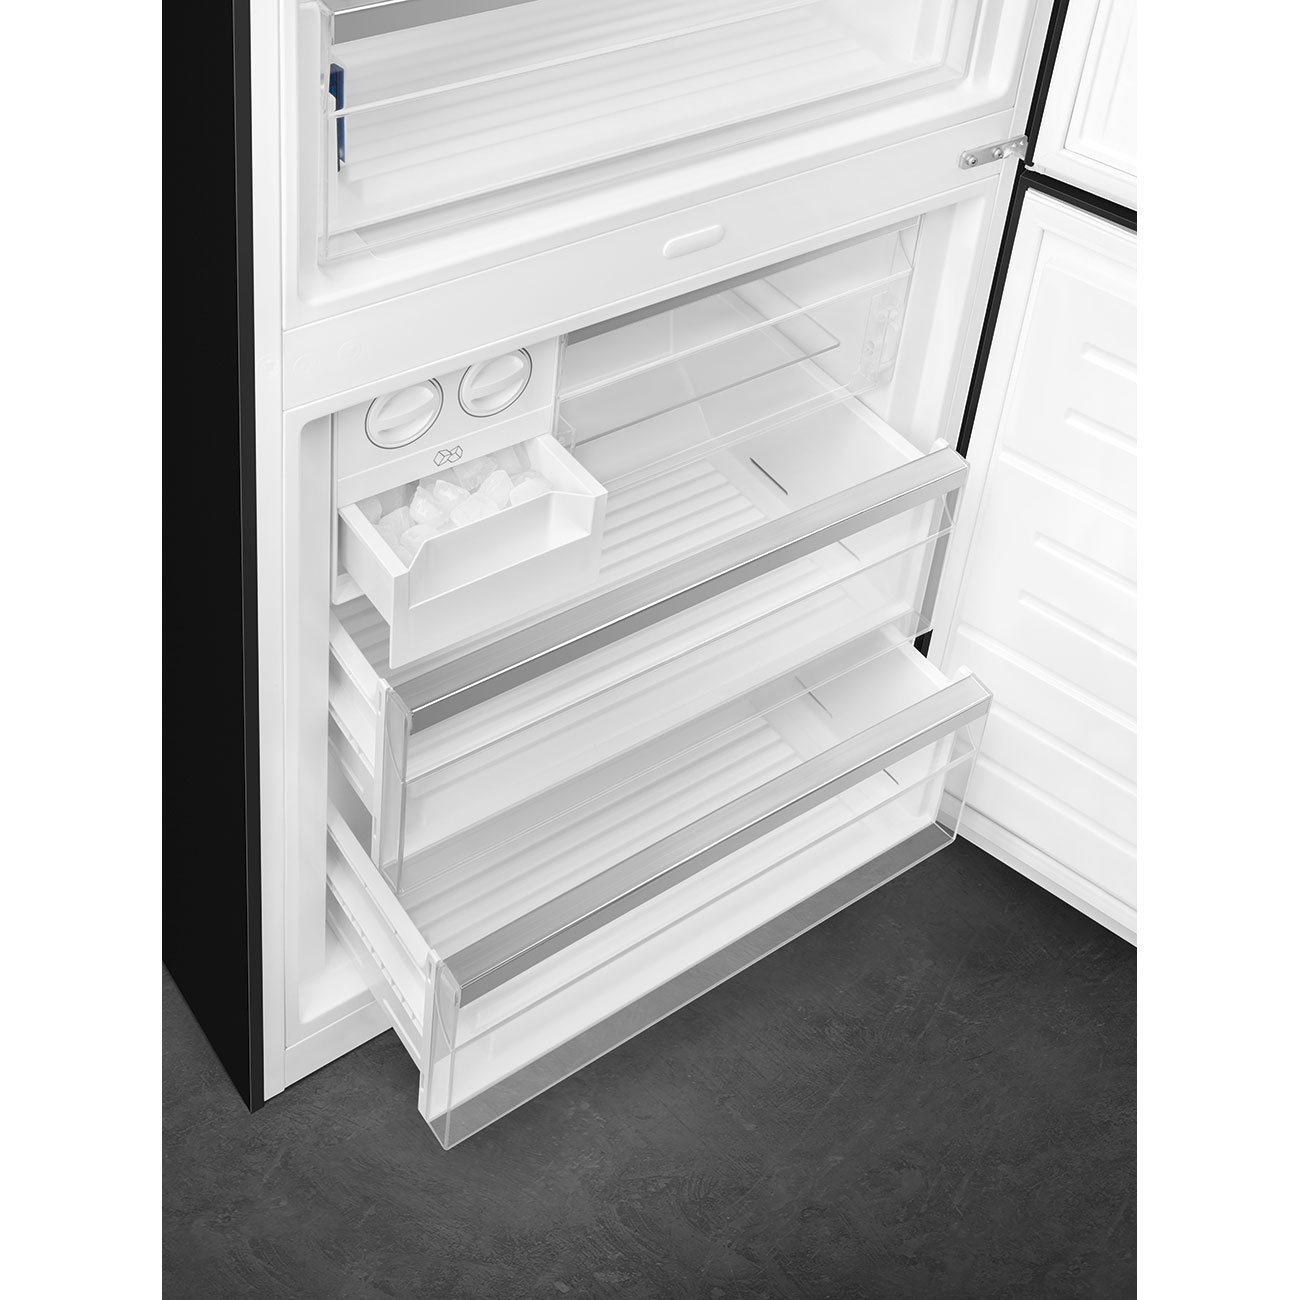 Bottom Mount Free standing refrigerator - Smeg_10